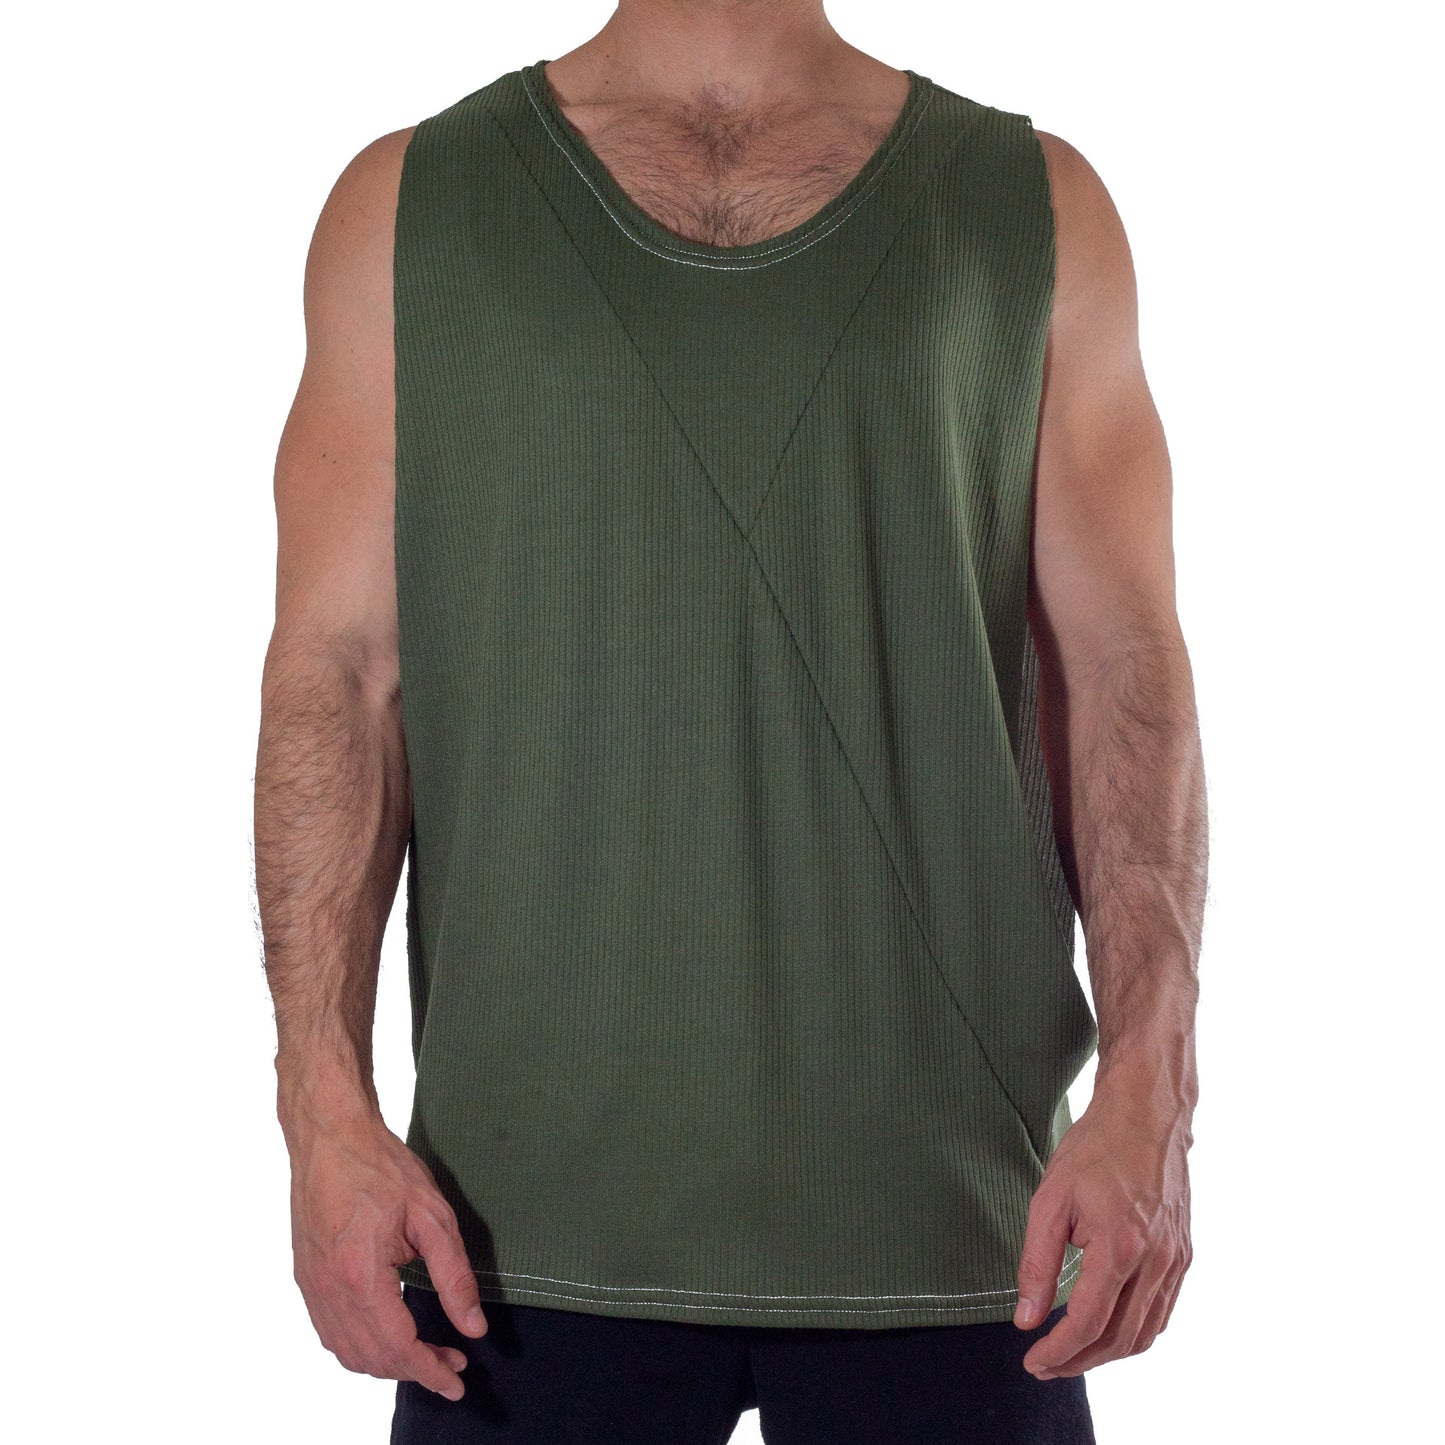 LS0002 LongSleeve Army Green Loose Sport T-Shirt skinit